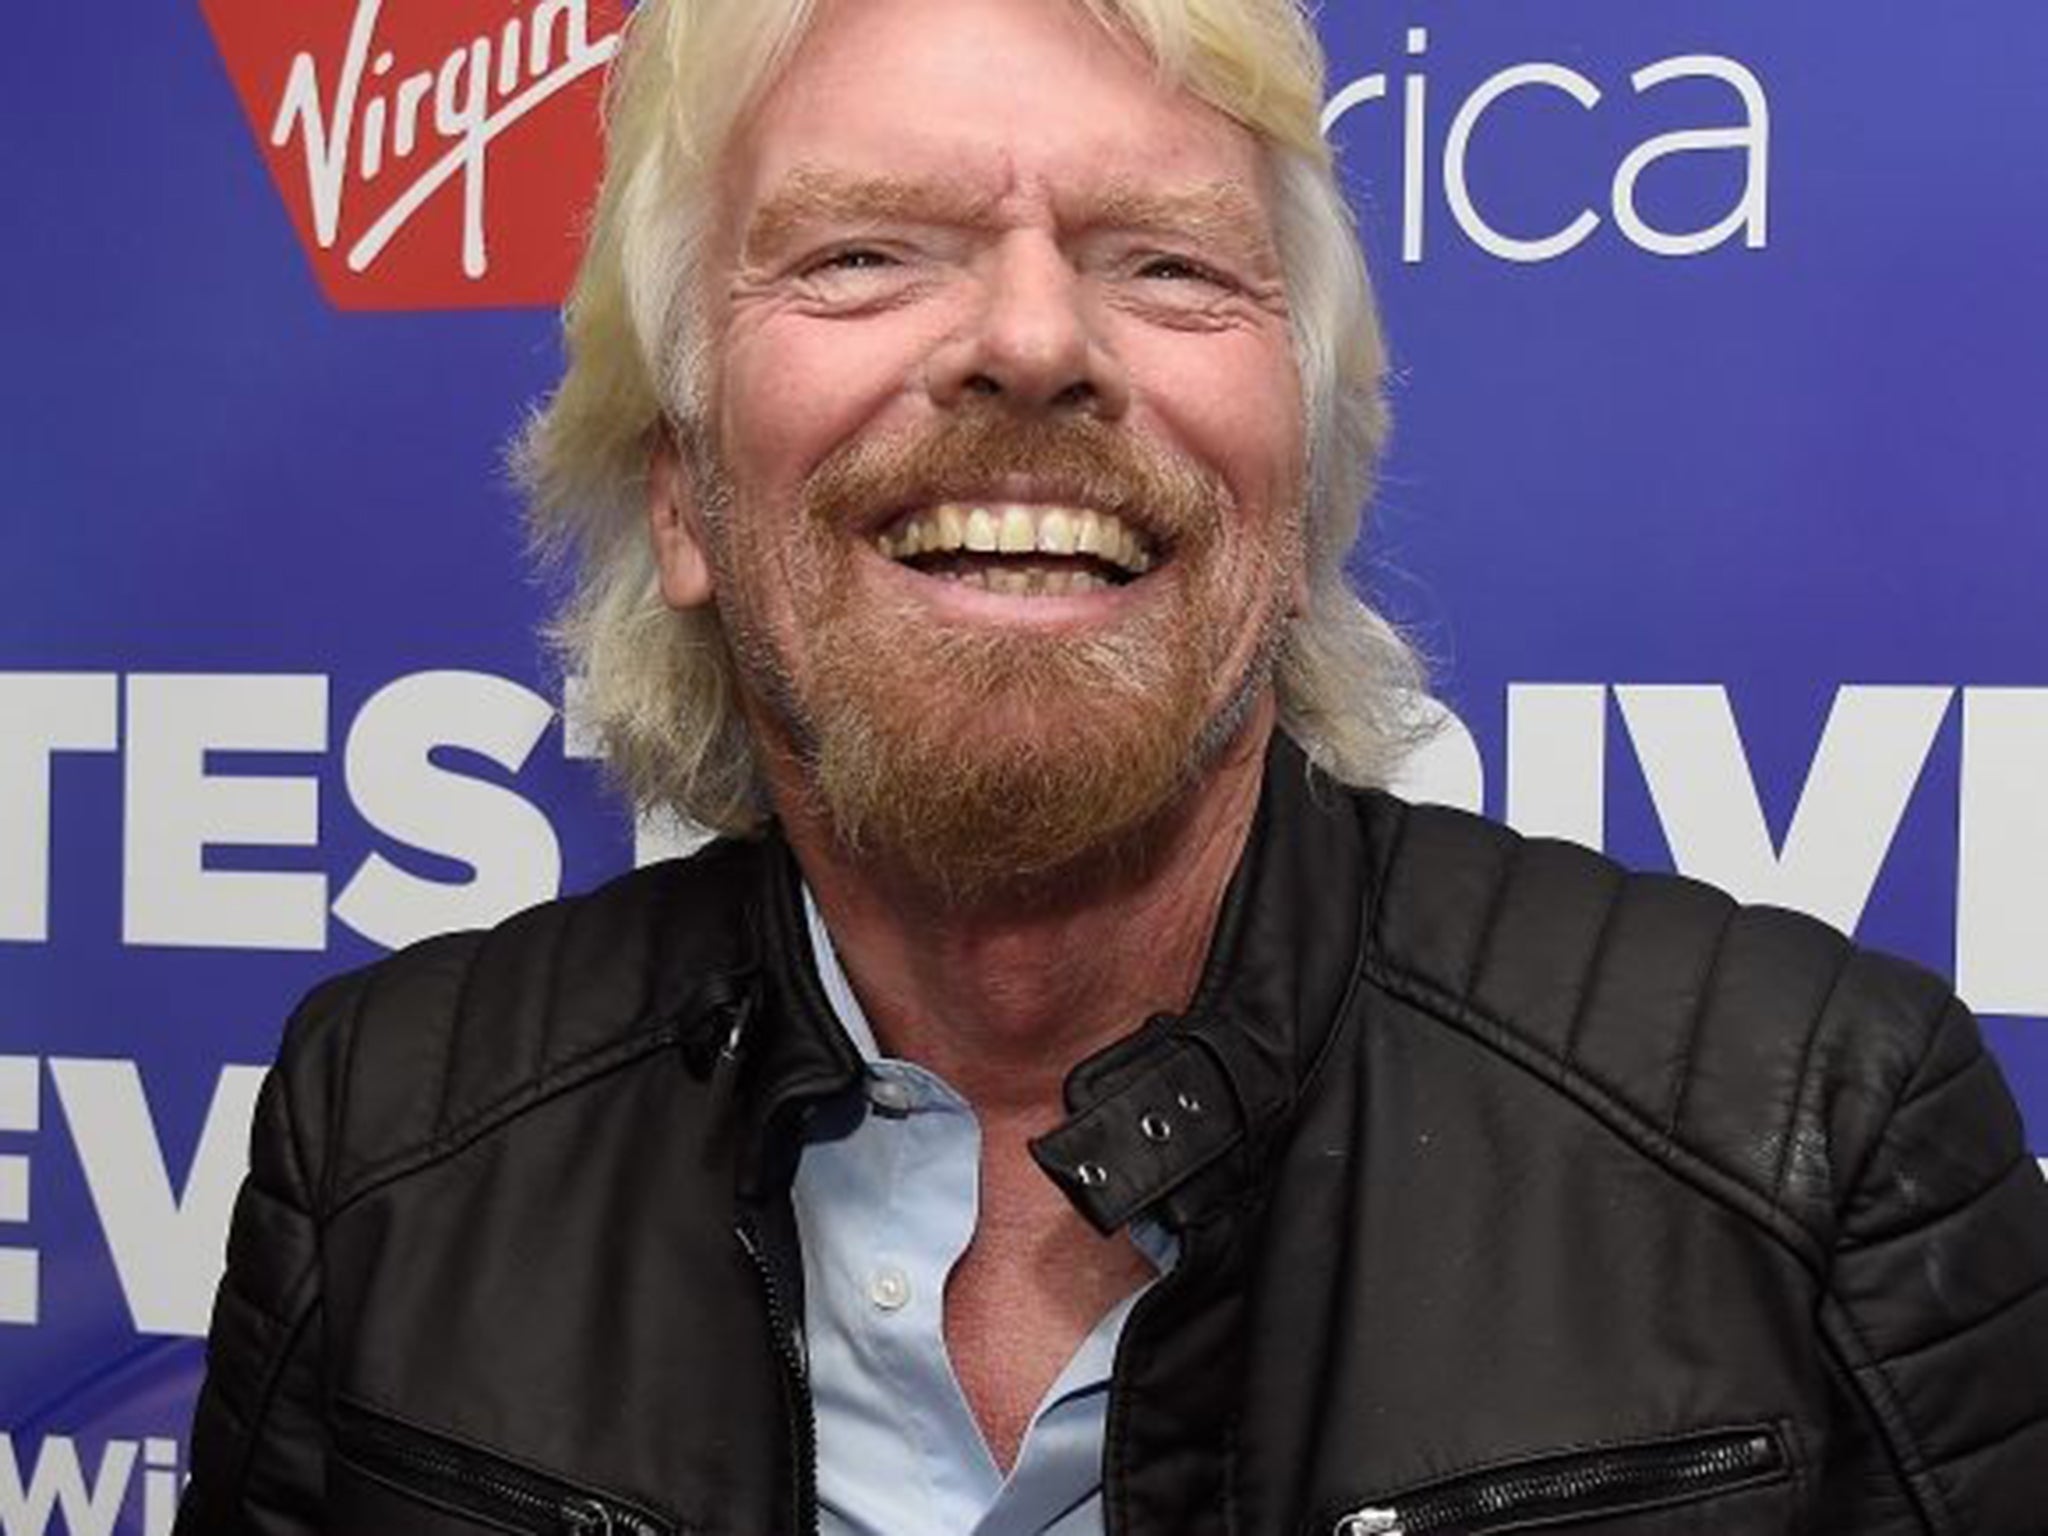 Branson's business empire is valued at around $5-5.5 billion